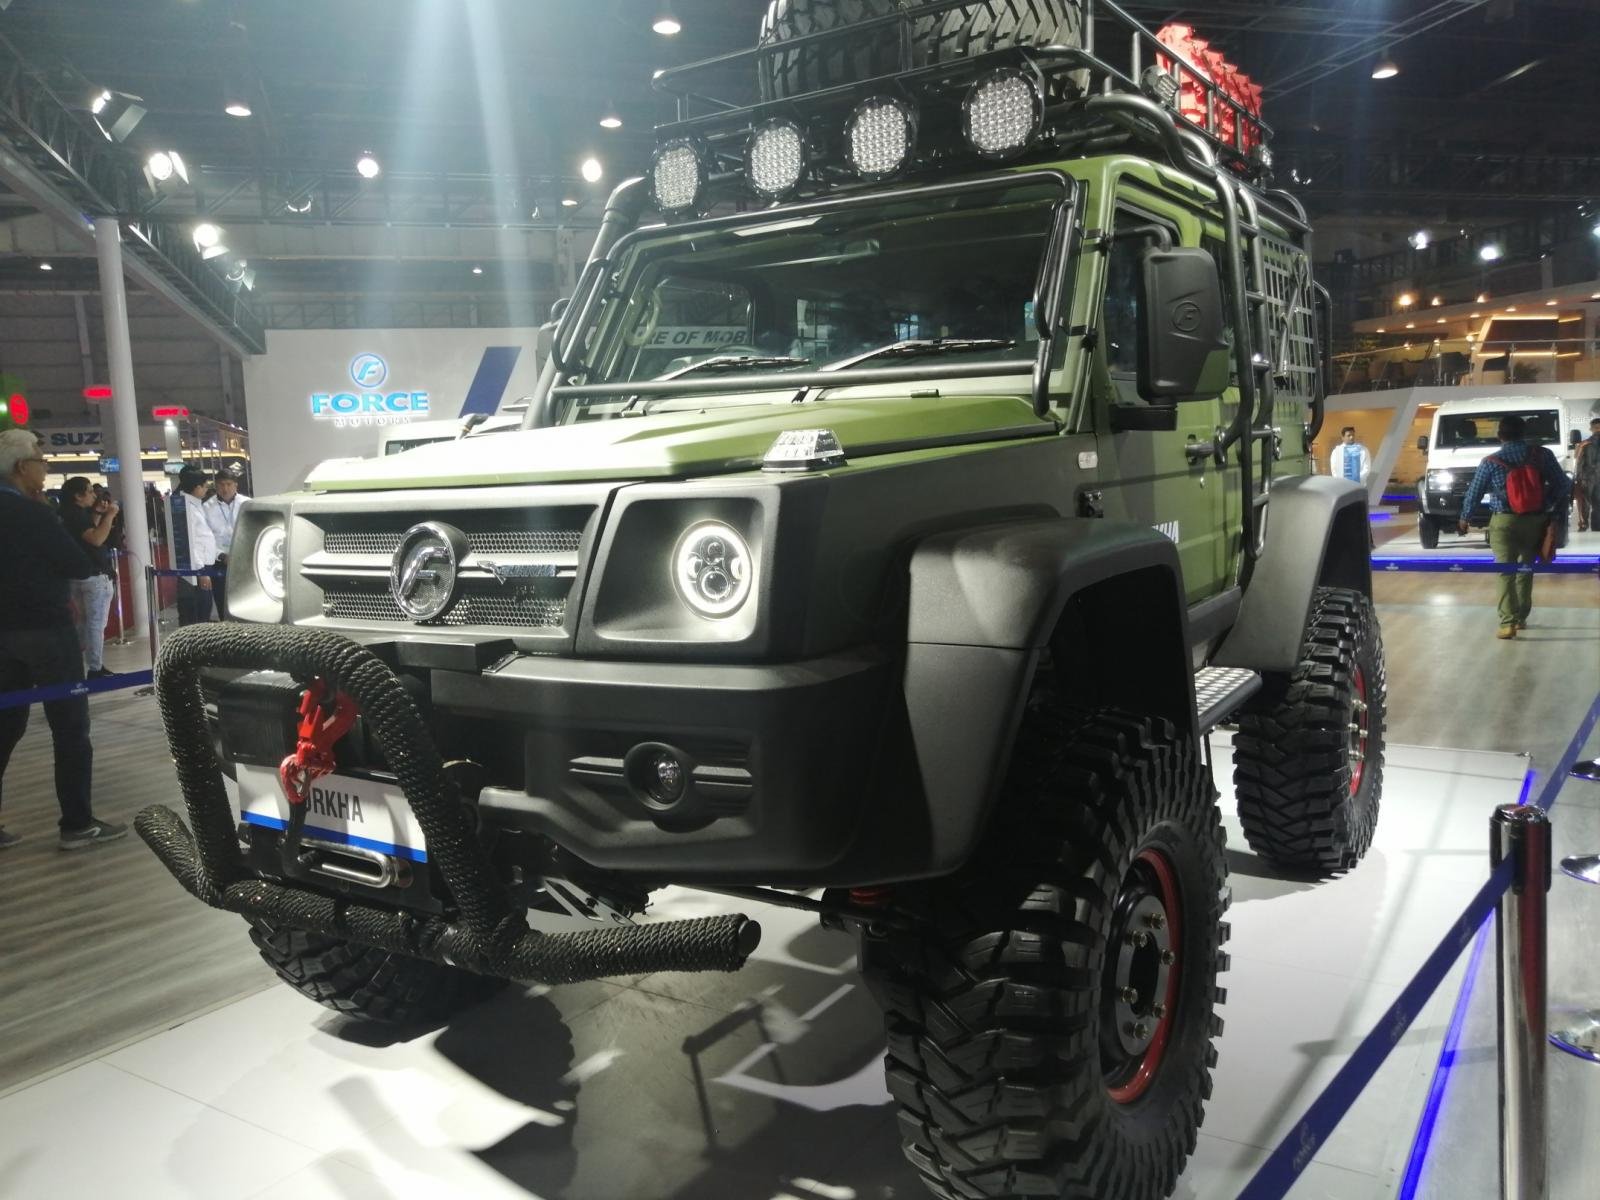 modified Force Gurkha at Auto Expo 2020